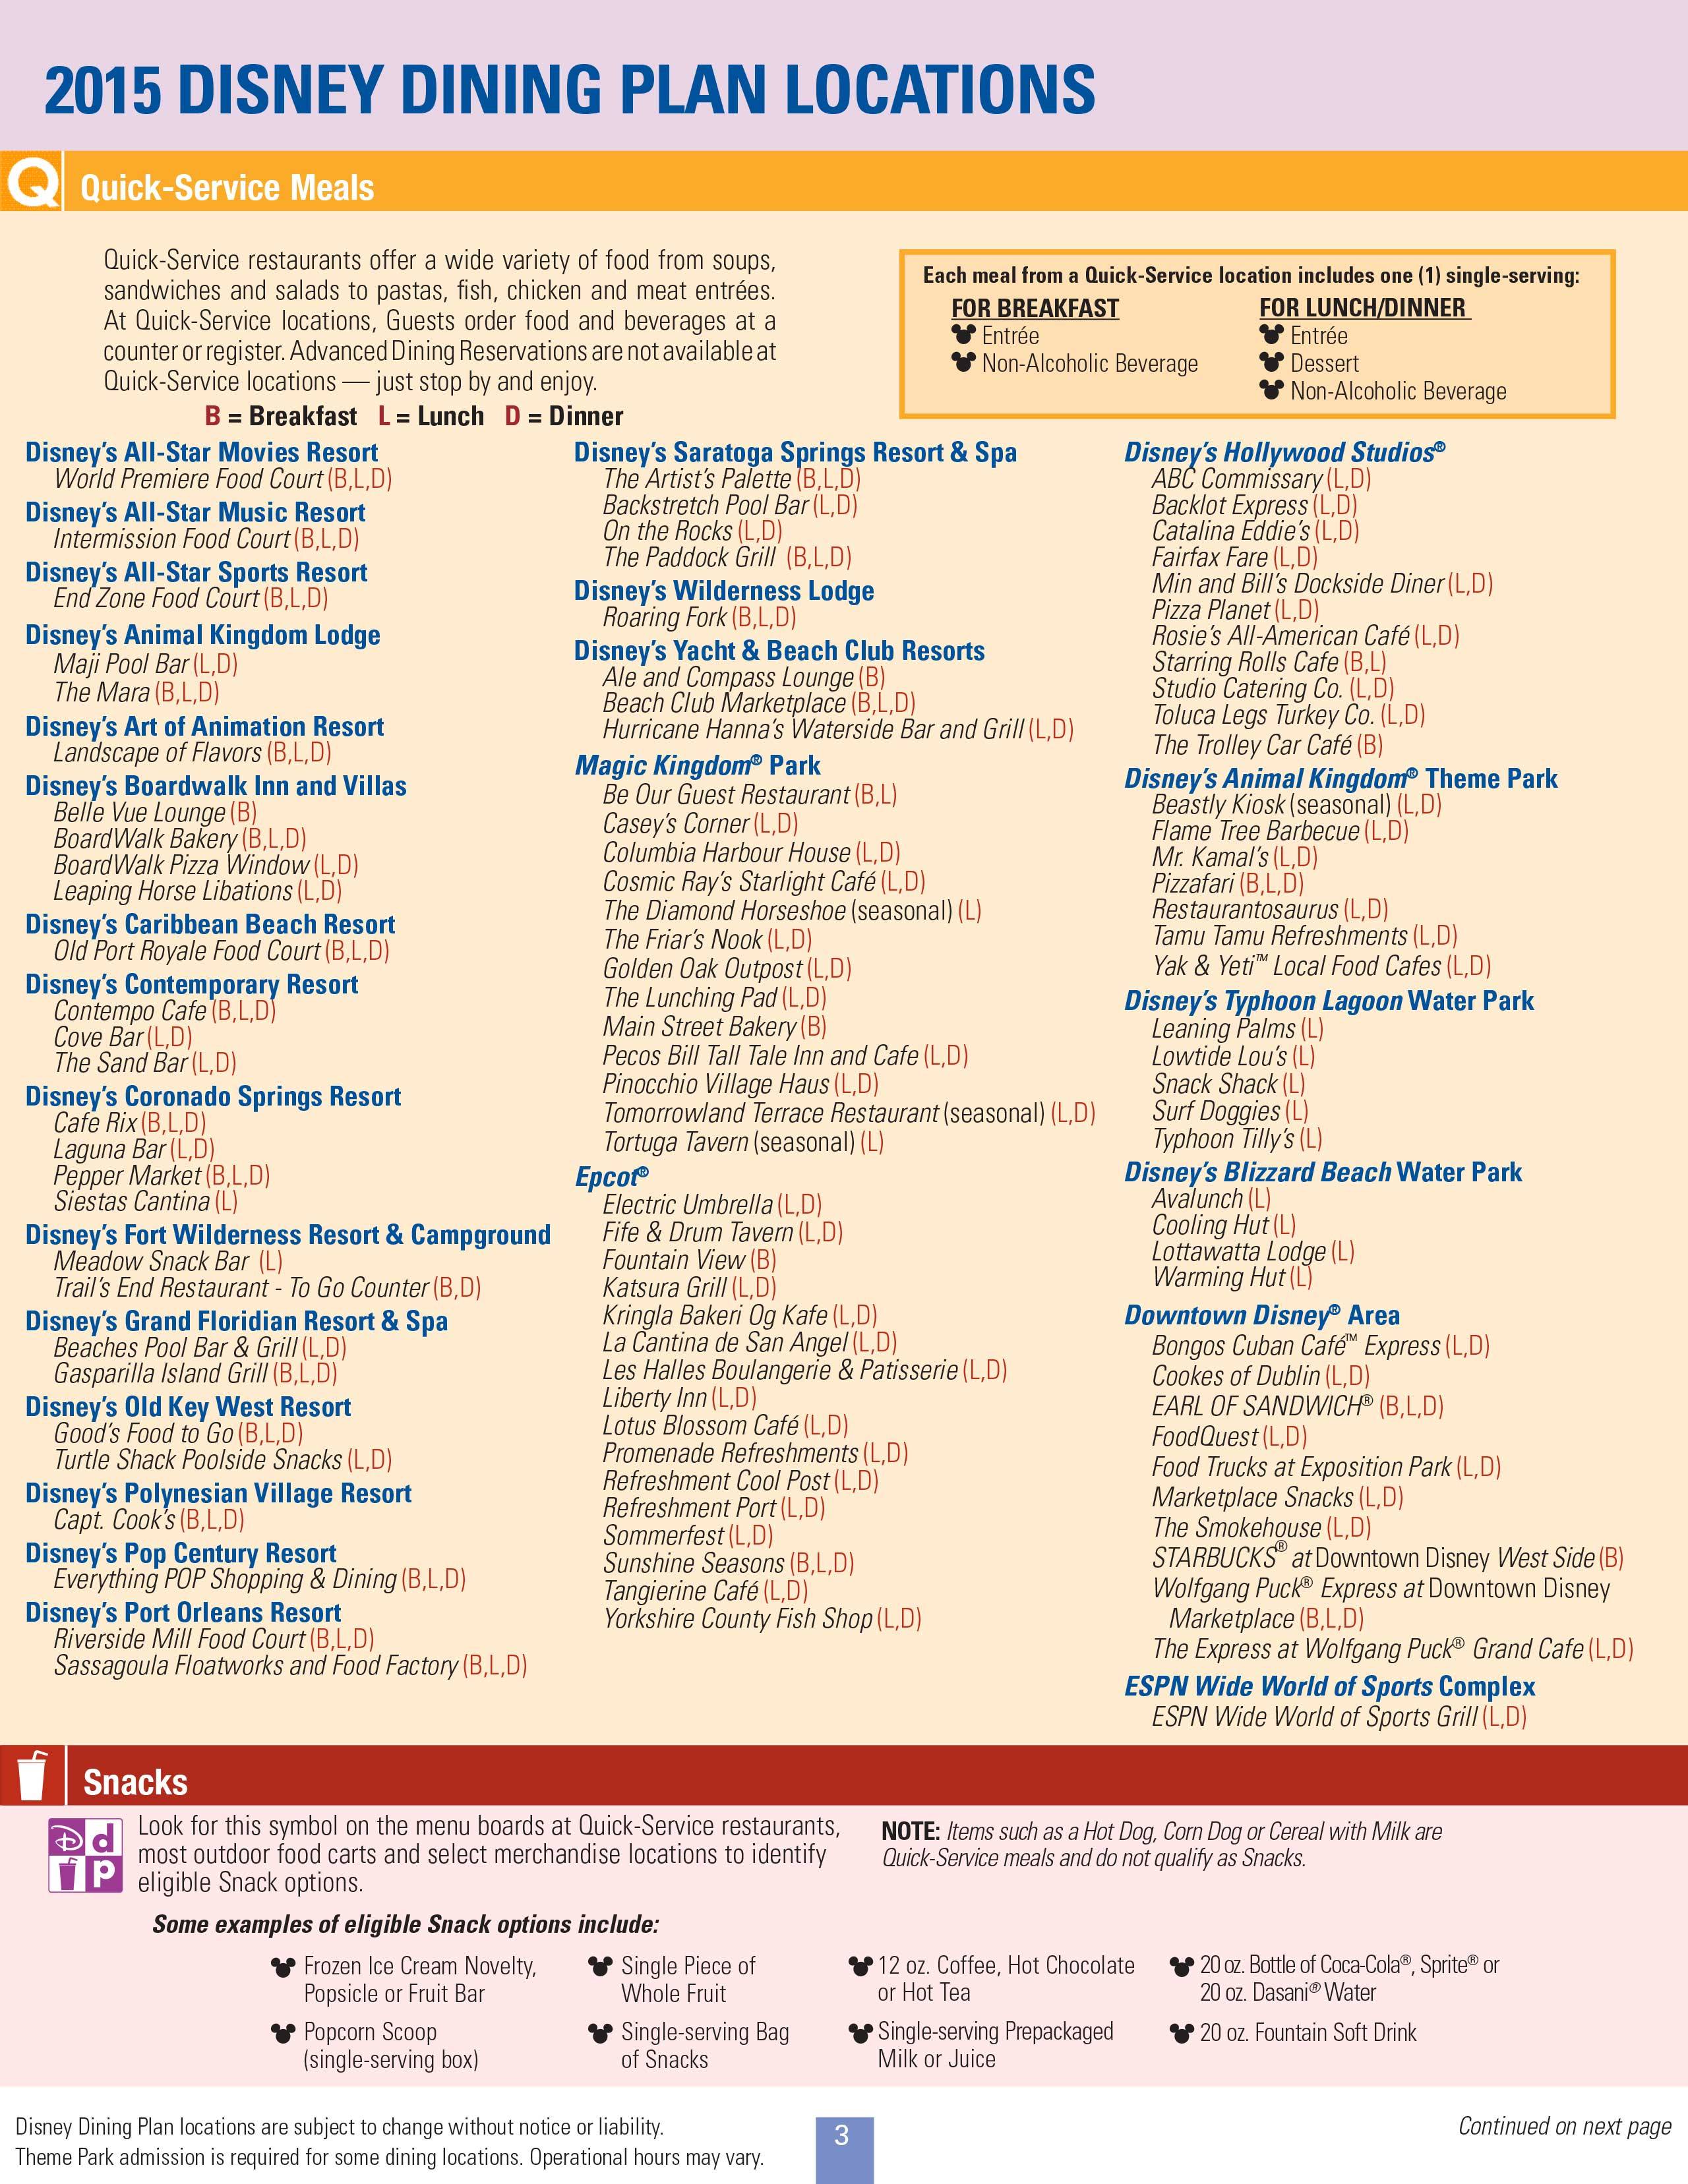 2015 Disney Dining Plan brochure - Page 3